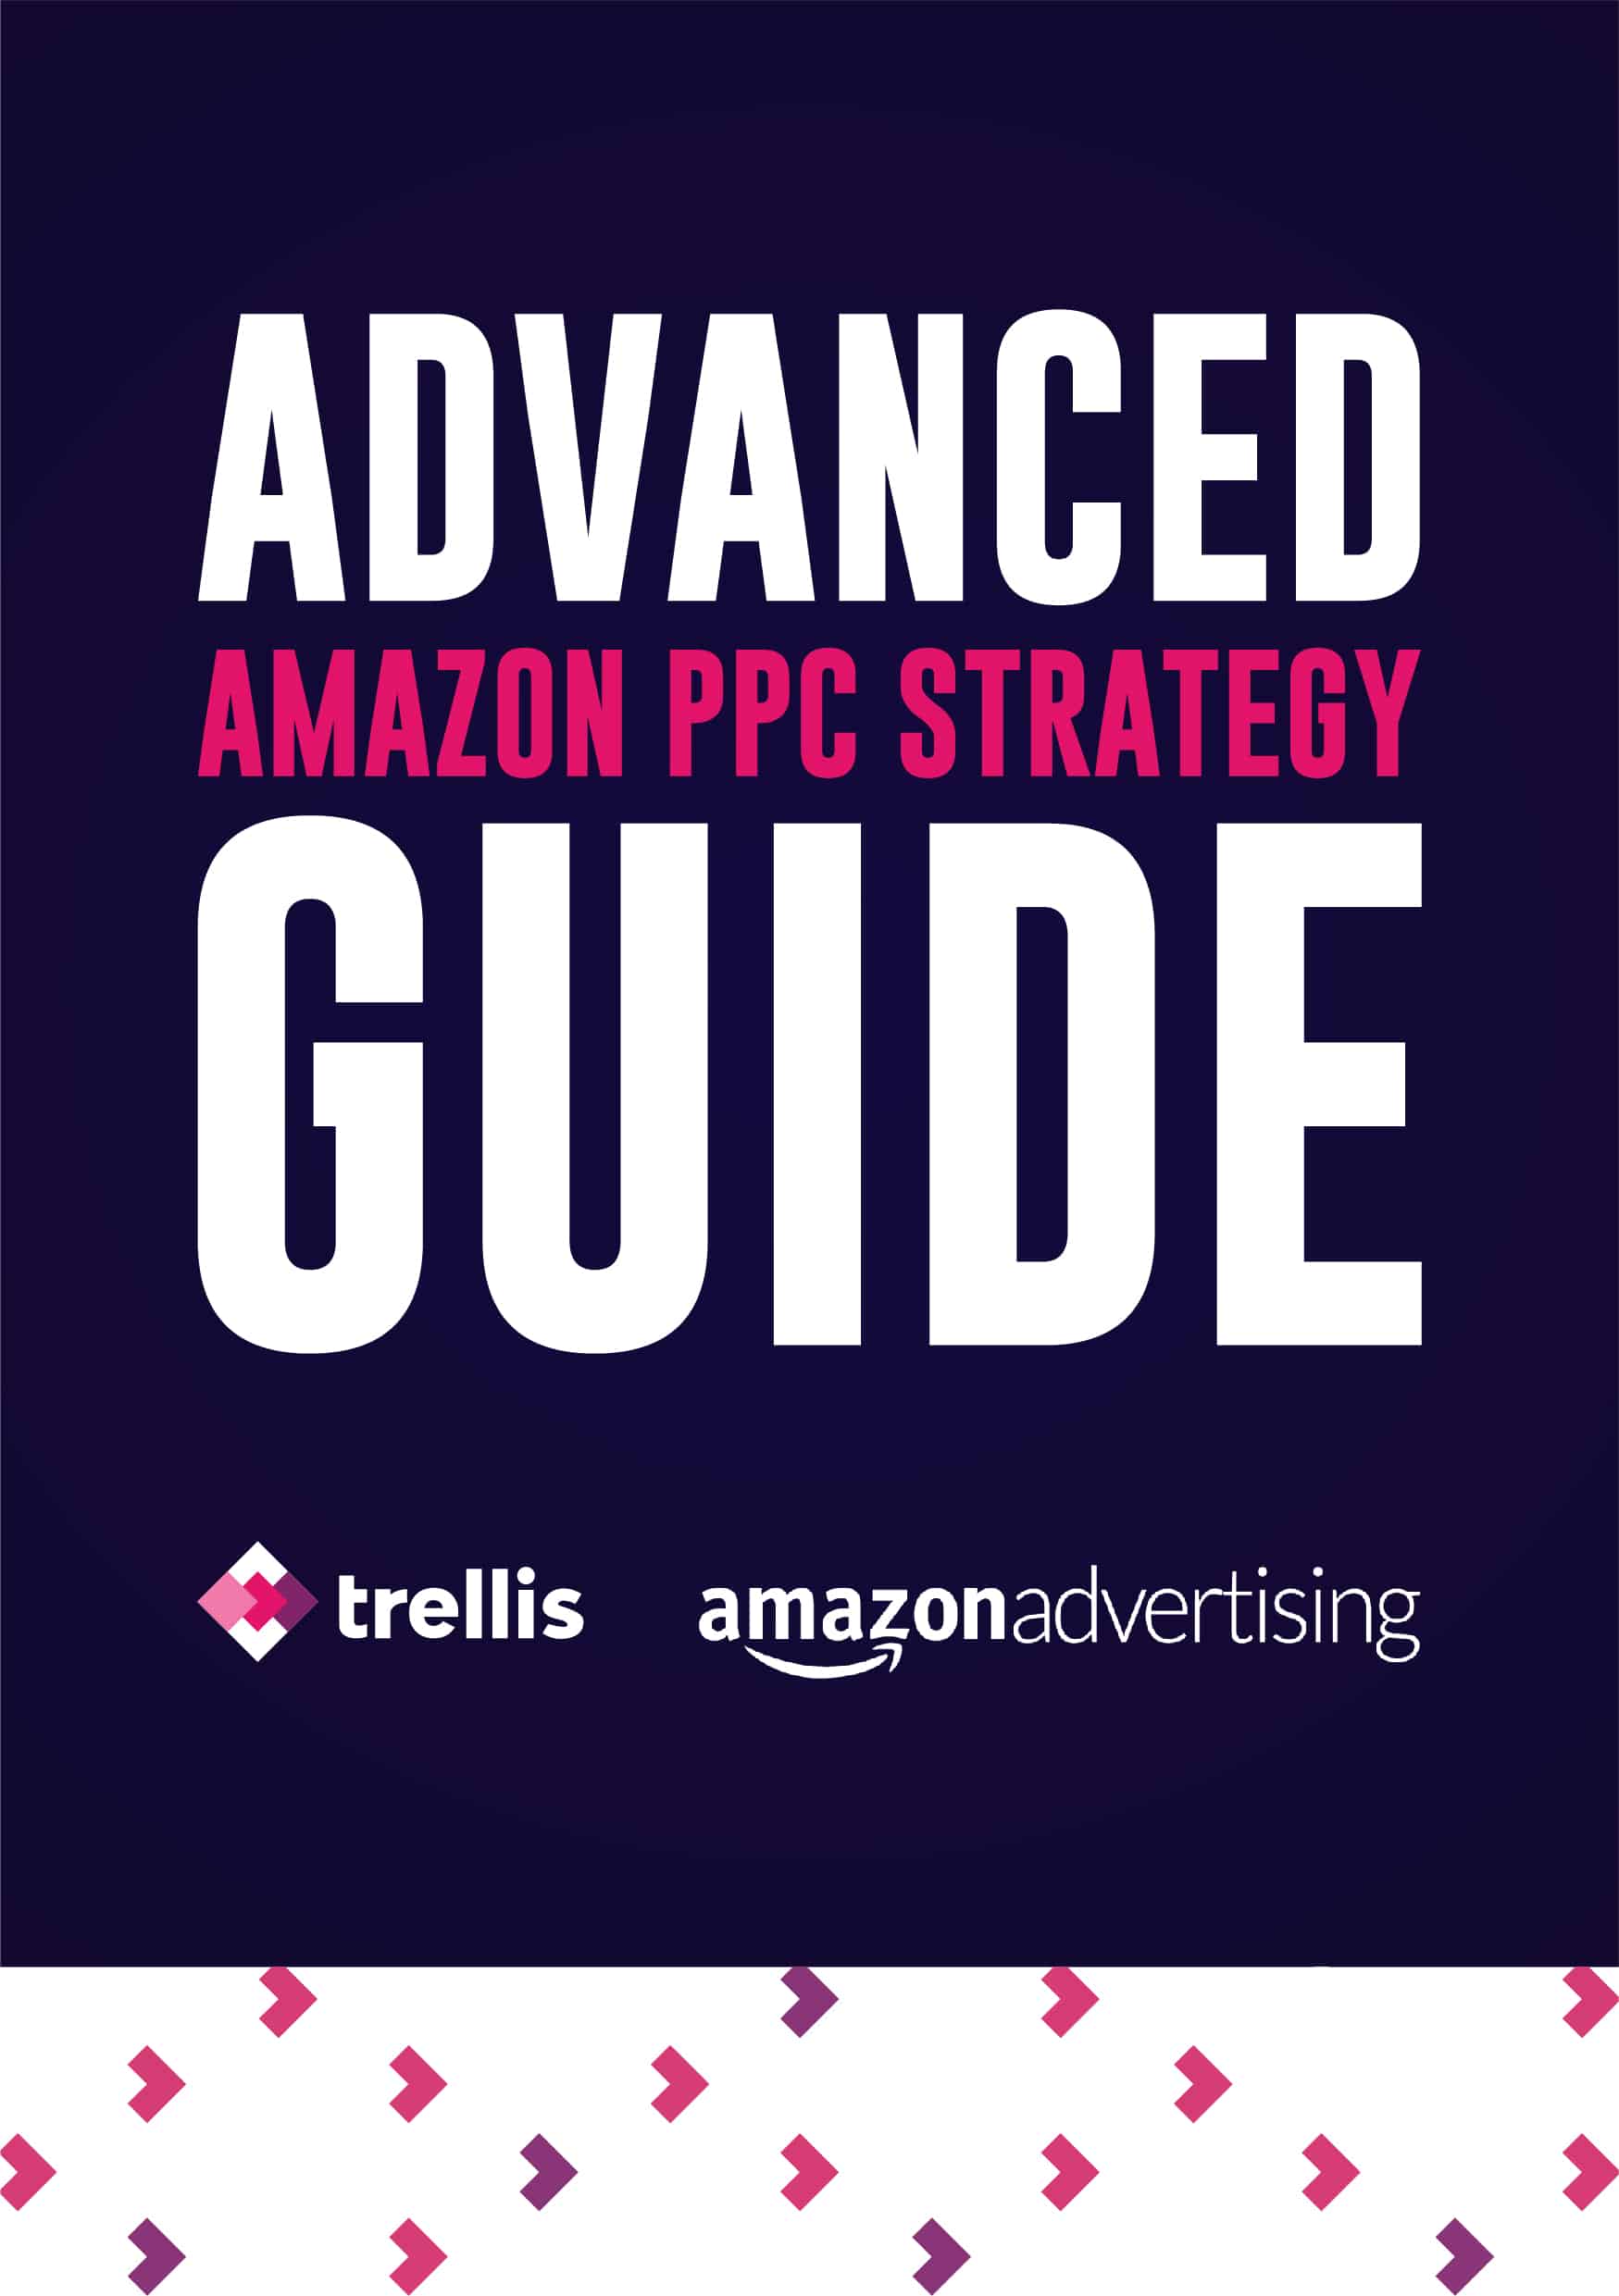 Amazon PPC Strategy ebook